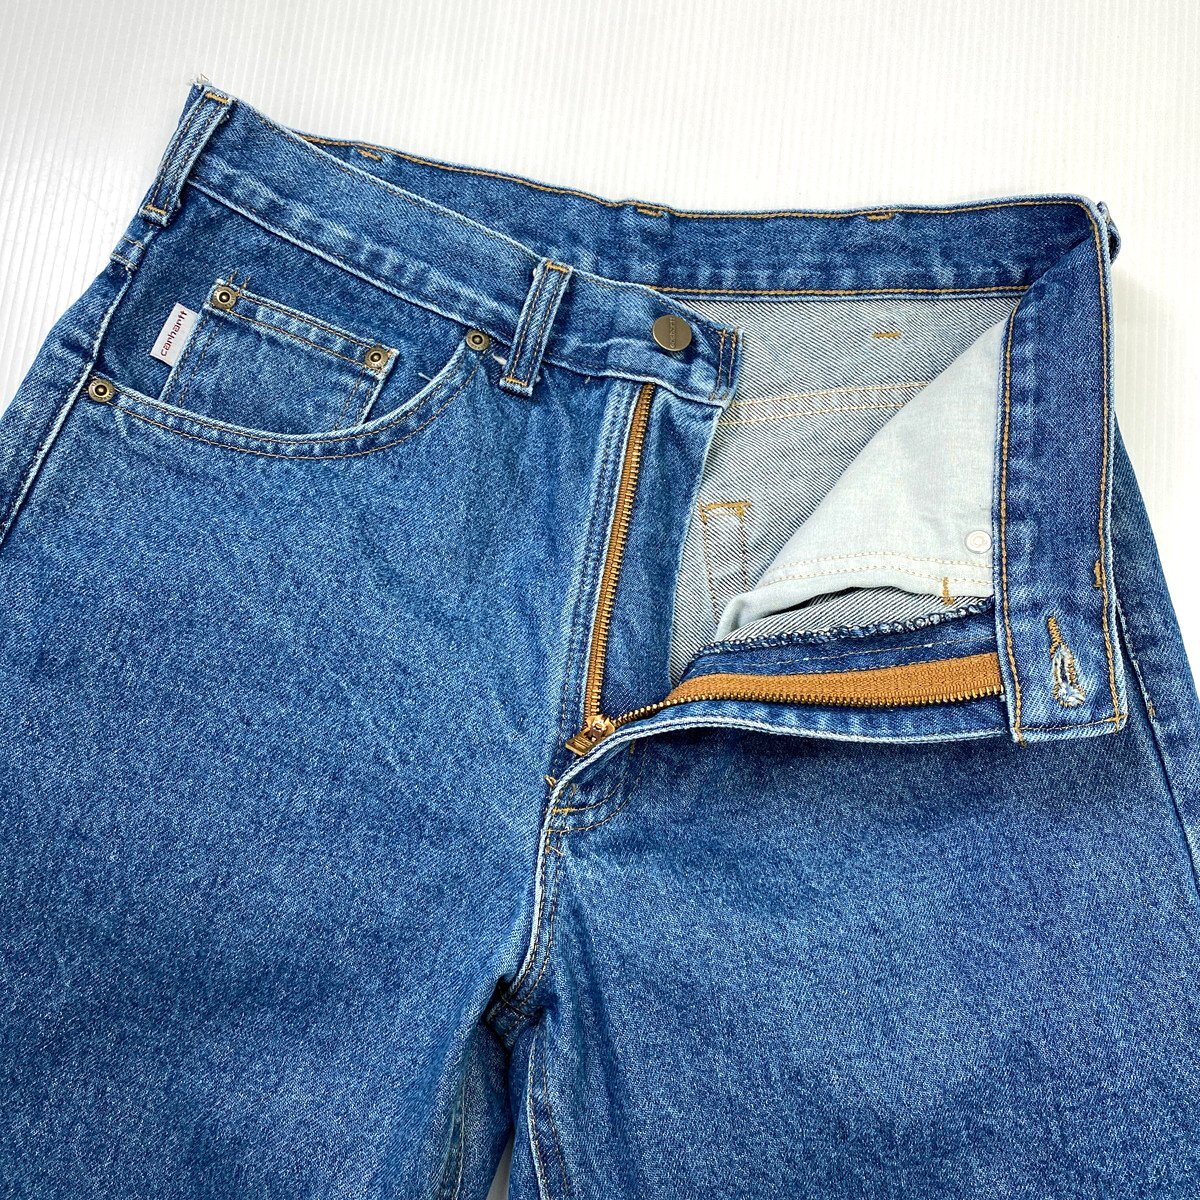 【W32】Carhartt カーハート Relaxed Fit Tapered Leg Jeans Stone Wash 加工 リラックスフィット テーパード デニムパンツ L30 ジーンズ_画像4